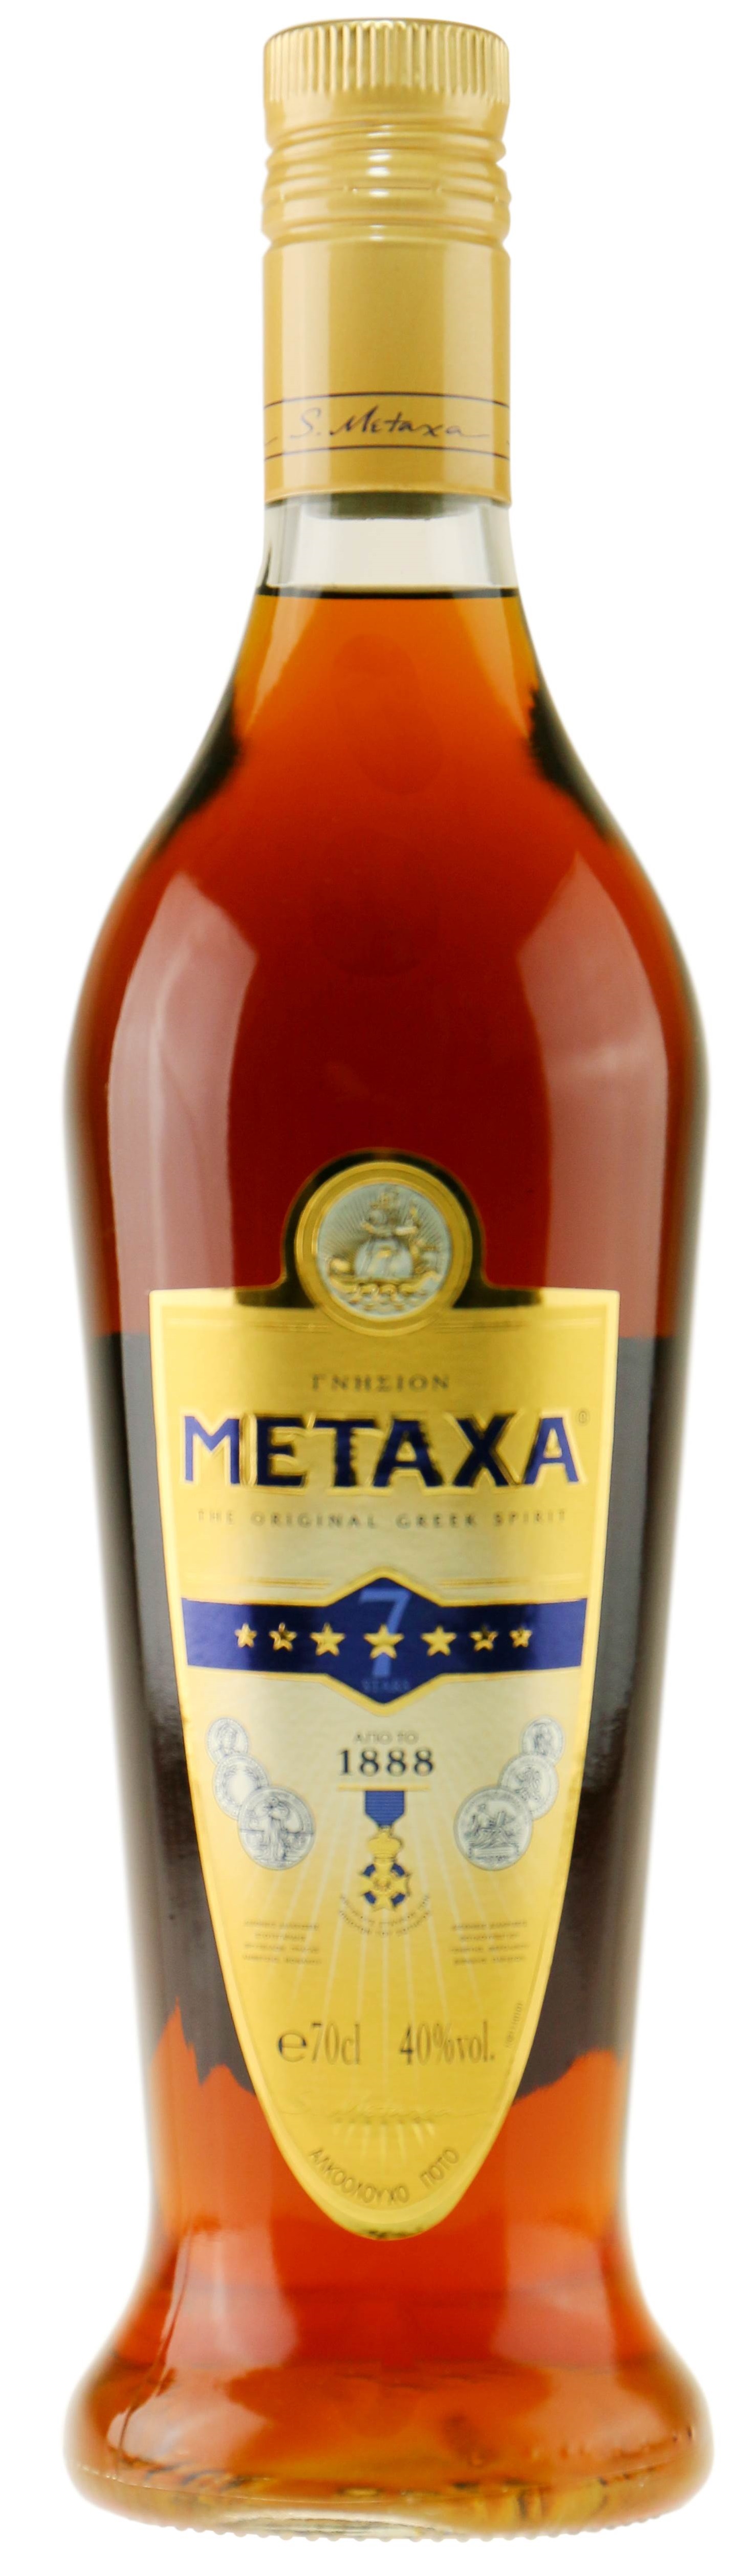 Metaxa 7 Stars The Original Greek Spirit 38%